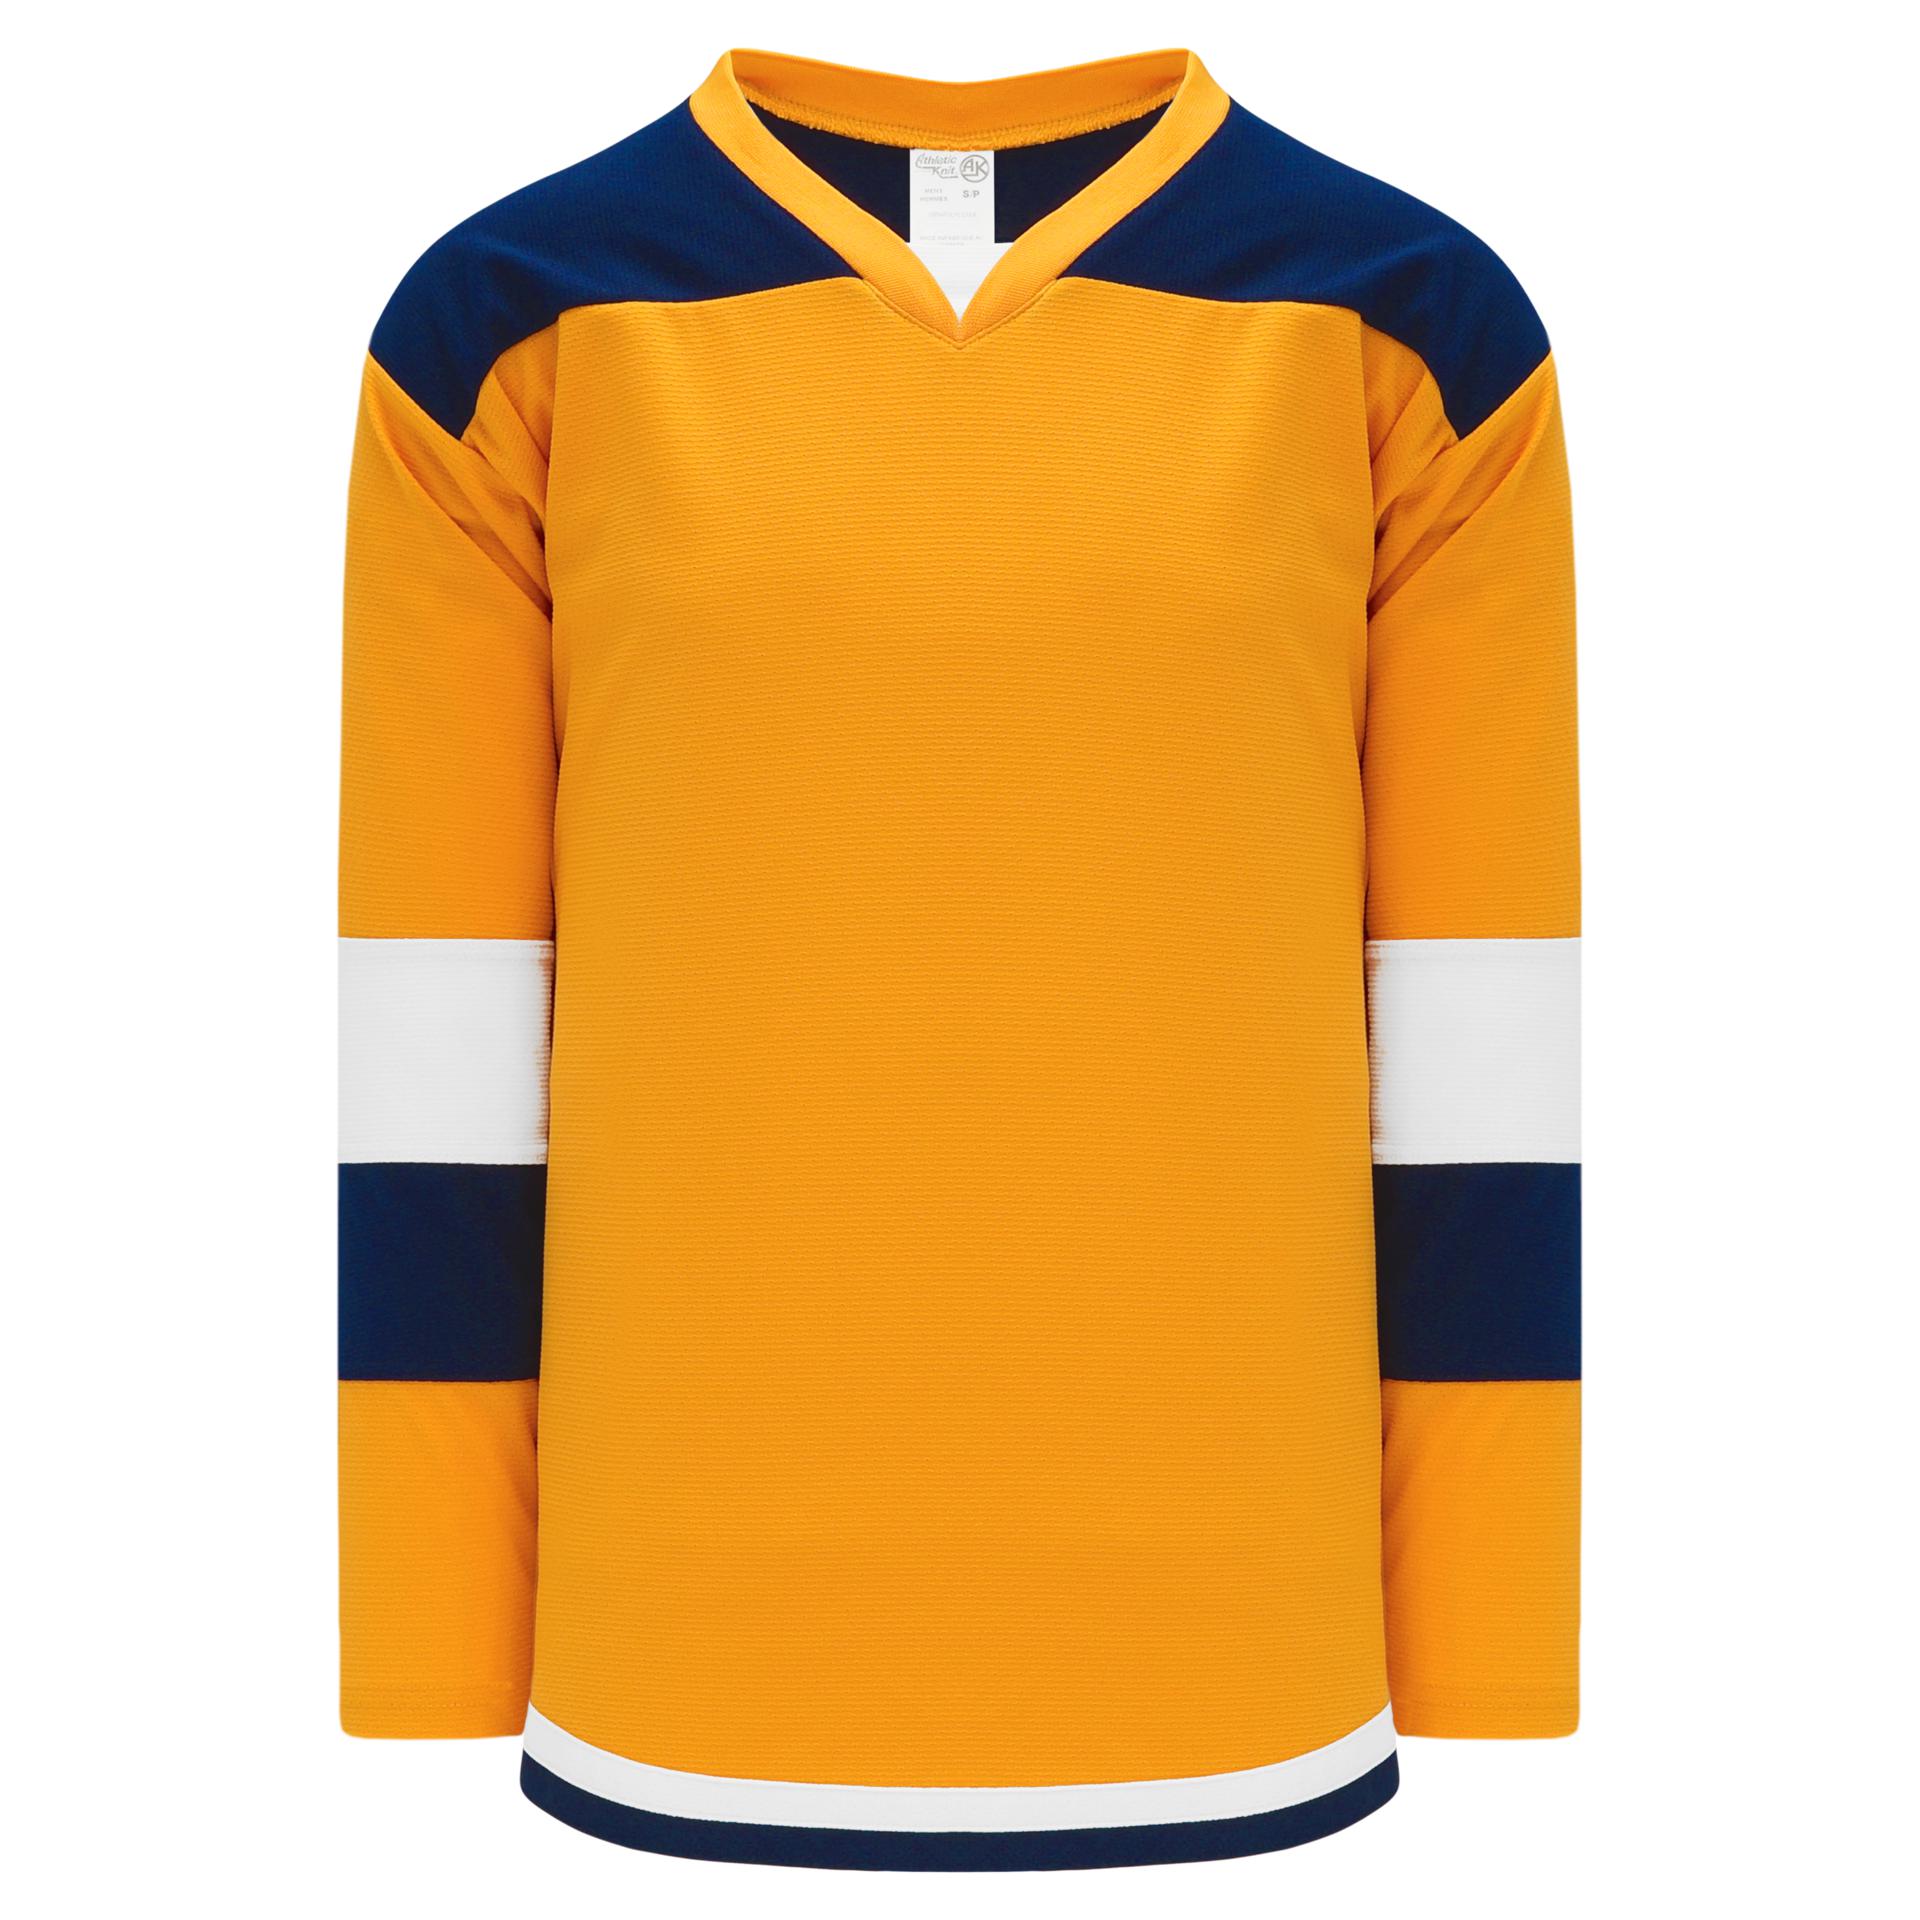 Light Blue/Gold/White Sublimated Custom Ice Hockey Jerseys | YoungSpeeds